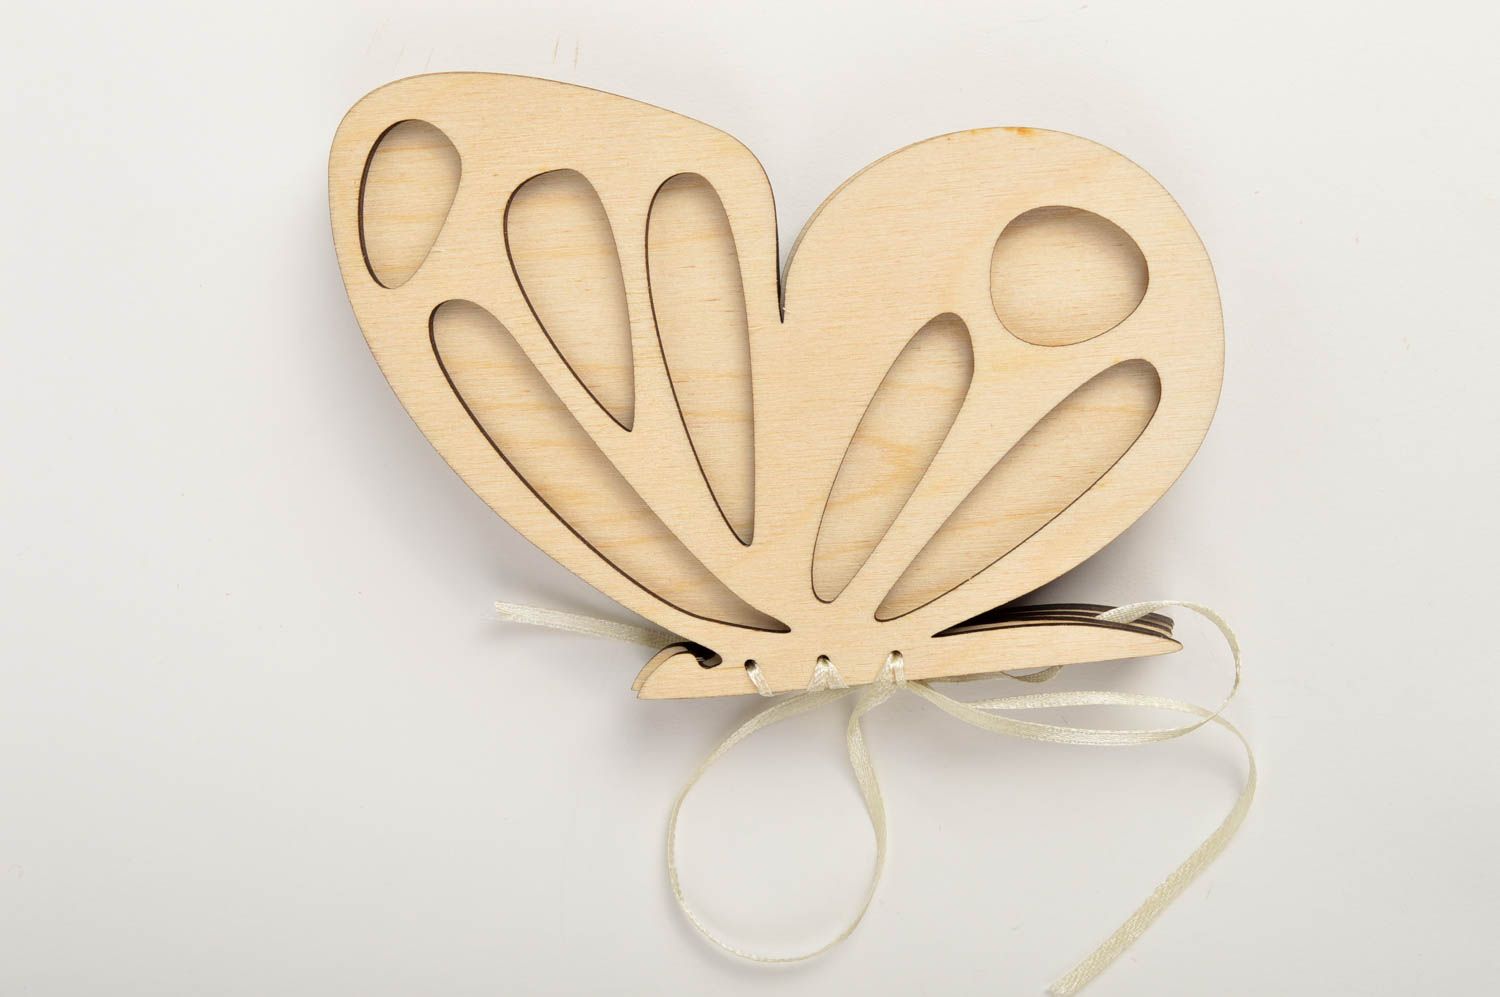 Unusual handmade wooden blank art materials art and craft supplies gift ideas photo 3